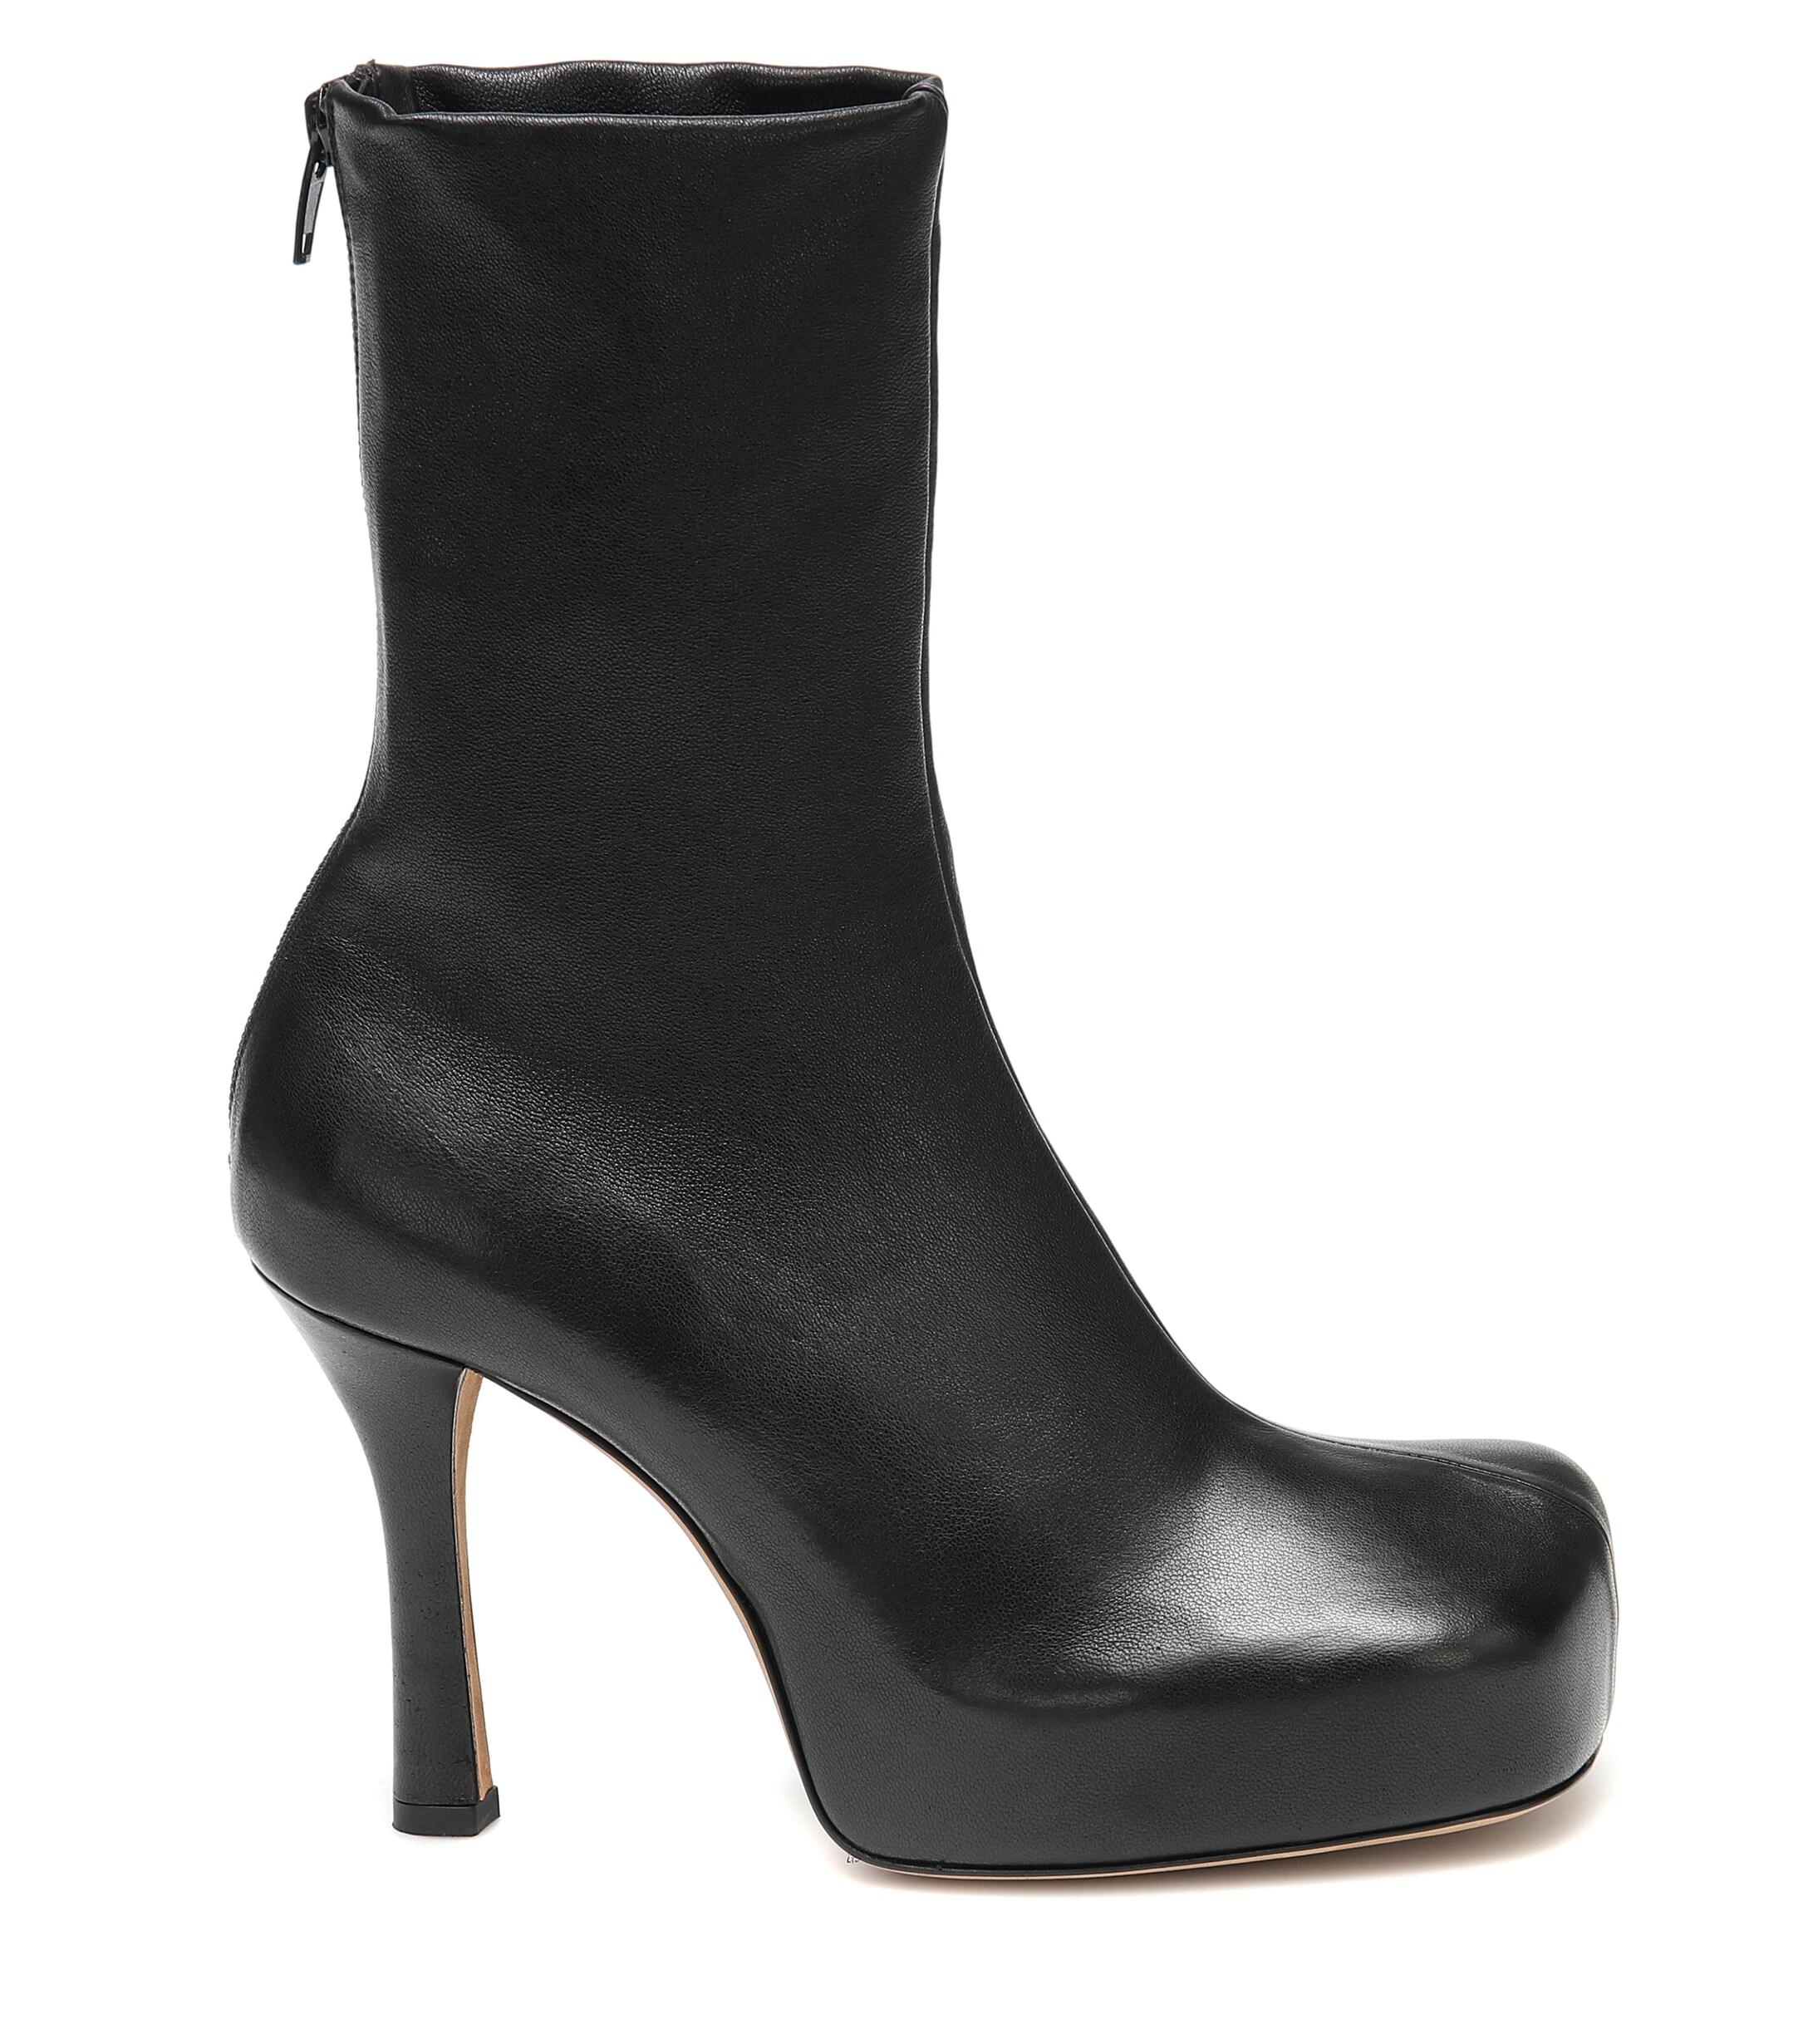 Bottega Veneta Bv Bold Leather Ankle Boots in Black - Lyst